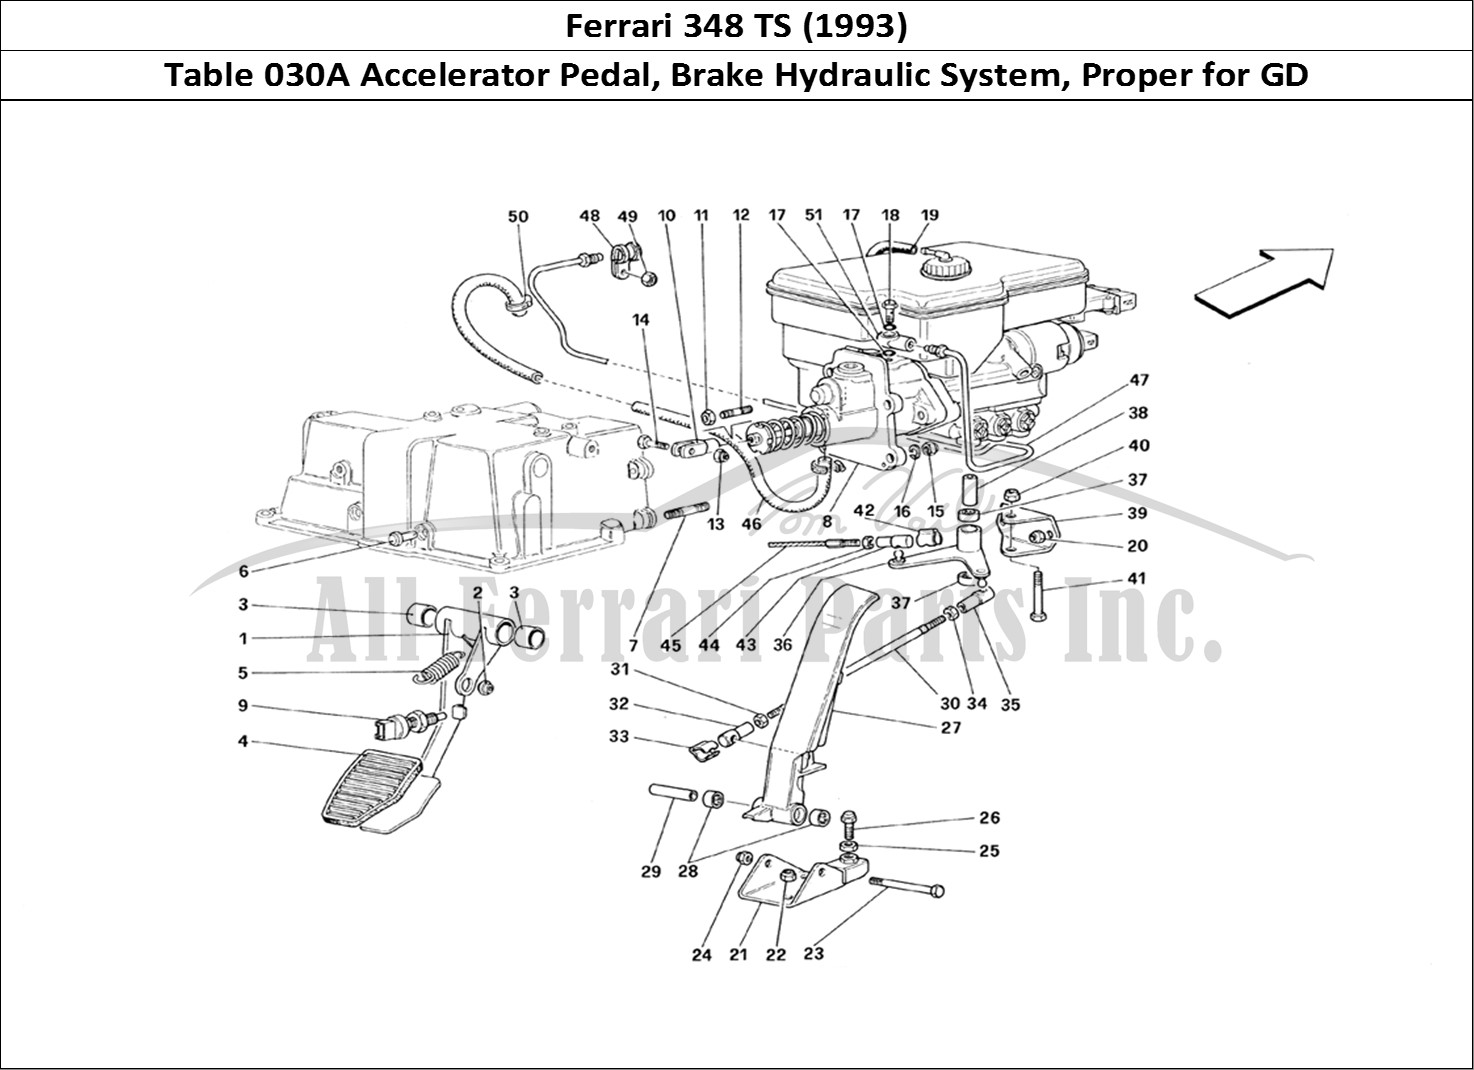 Ferrari Parts Ferrari 348 TB (1993) Page 030 Throttle Pedal and Brake